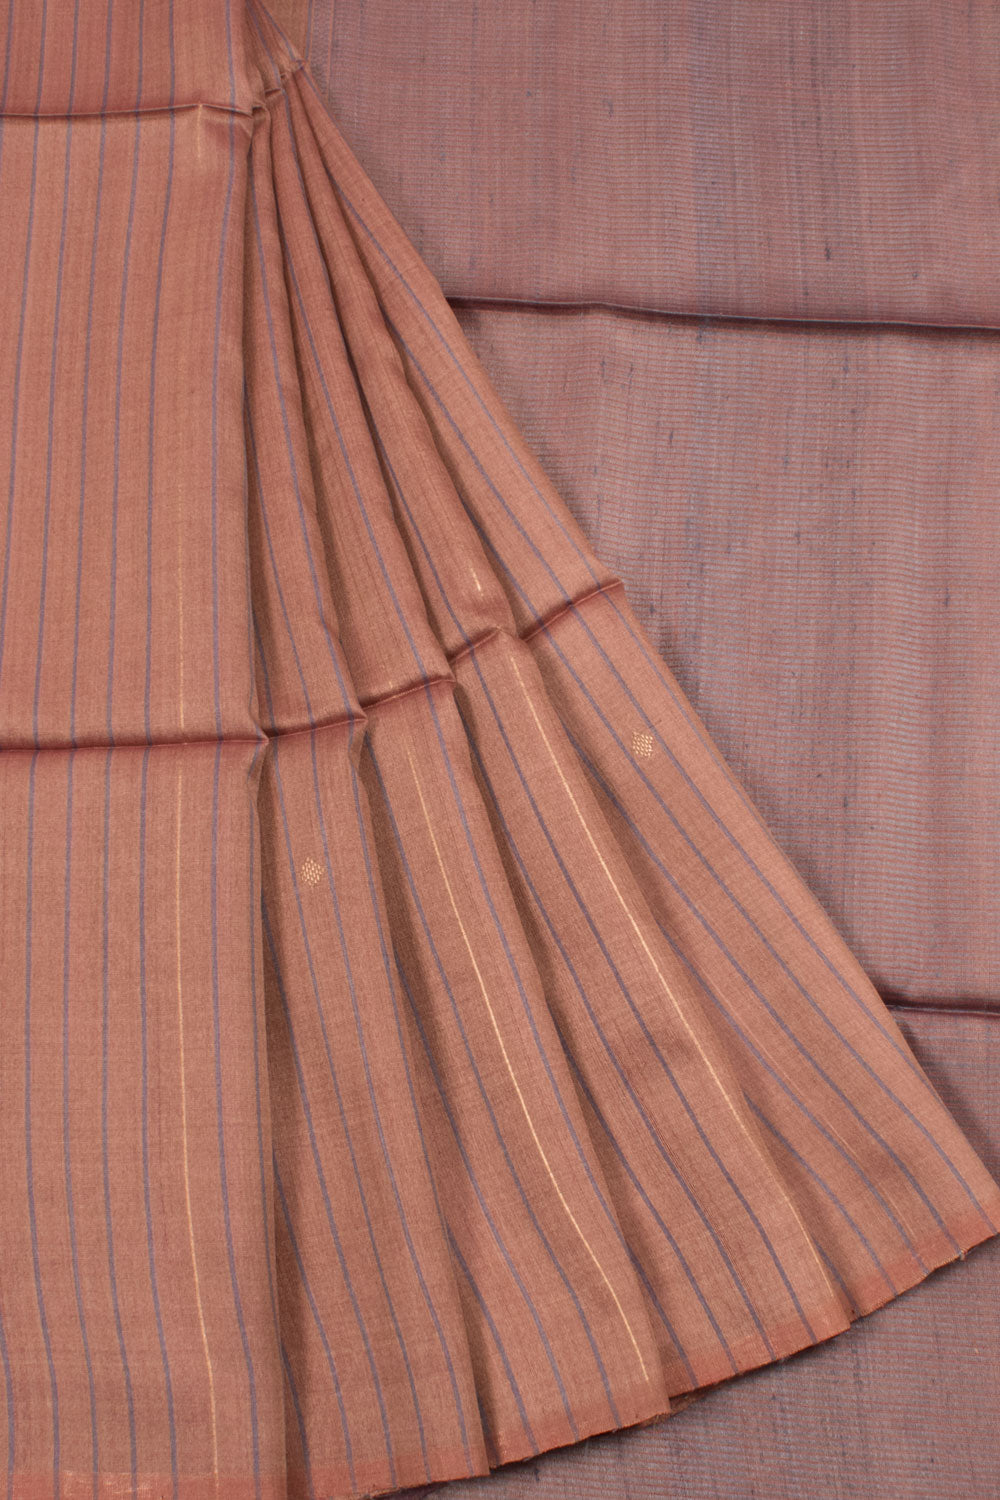 Handloom Tussar Silk Saree with Diamond Motifs and Zari Stripes Design